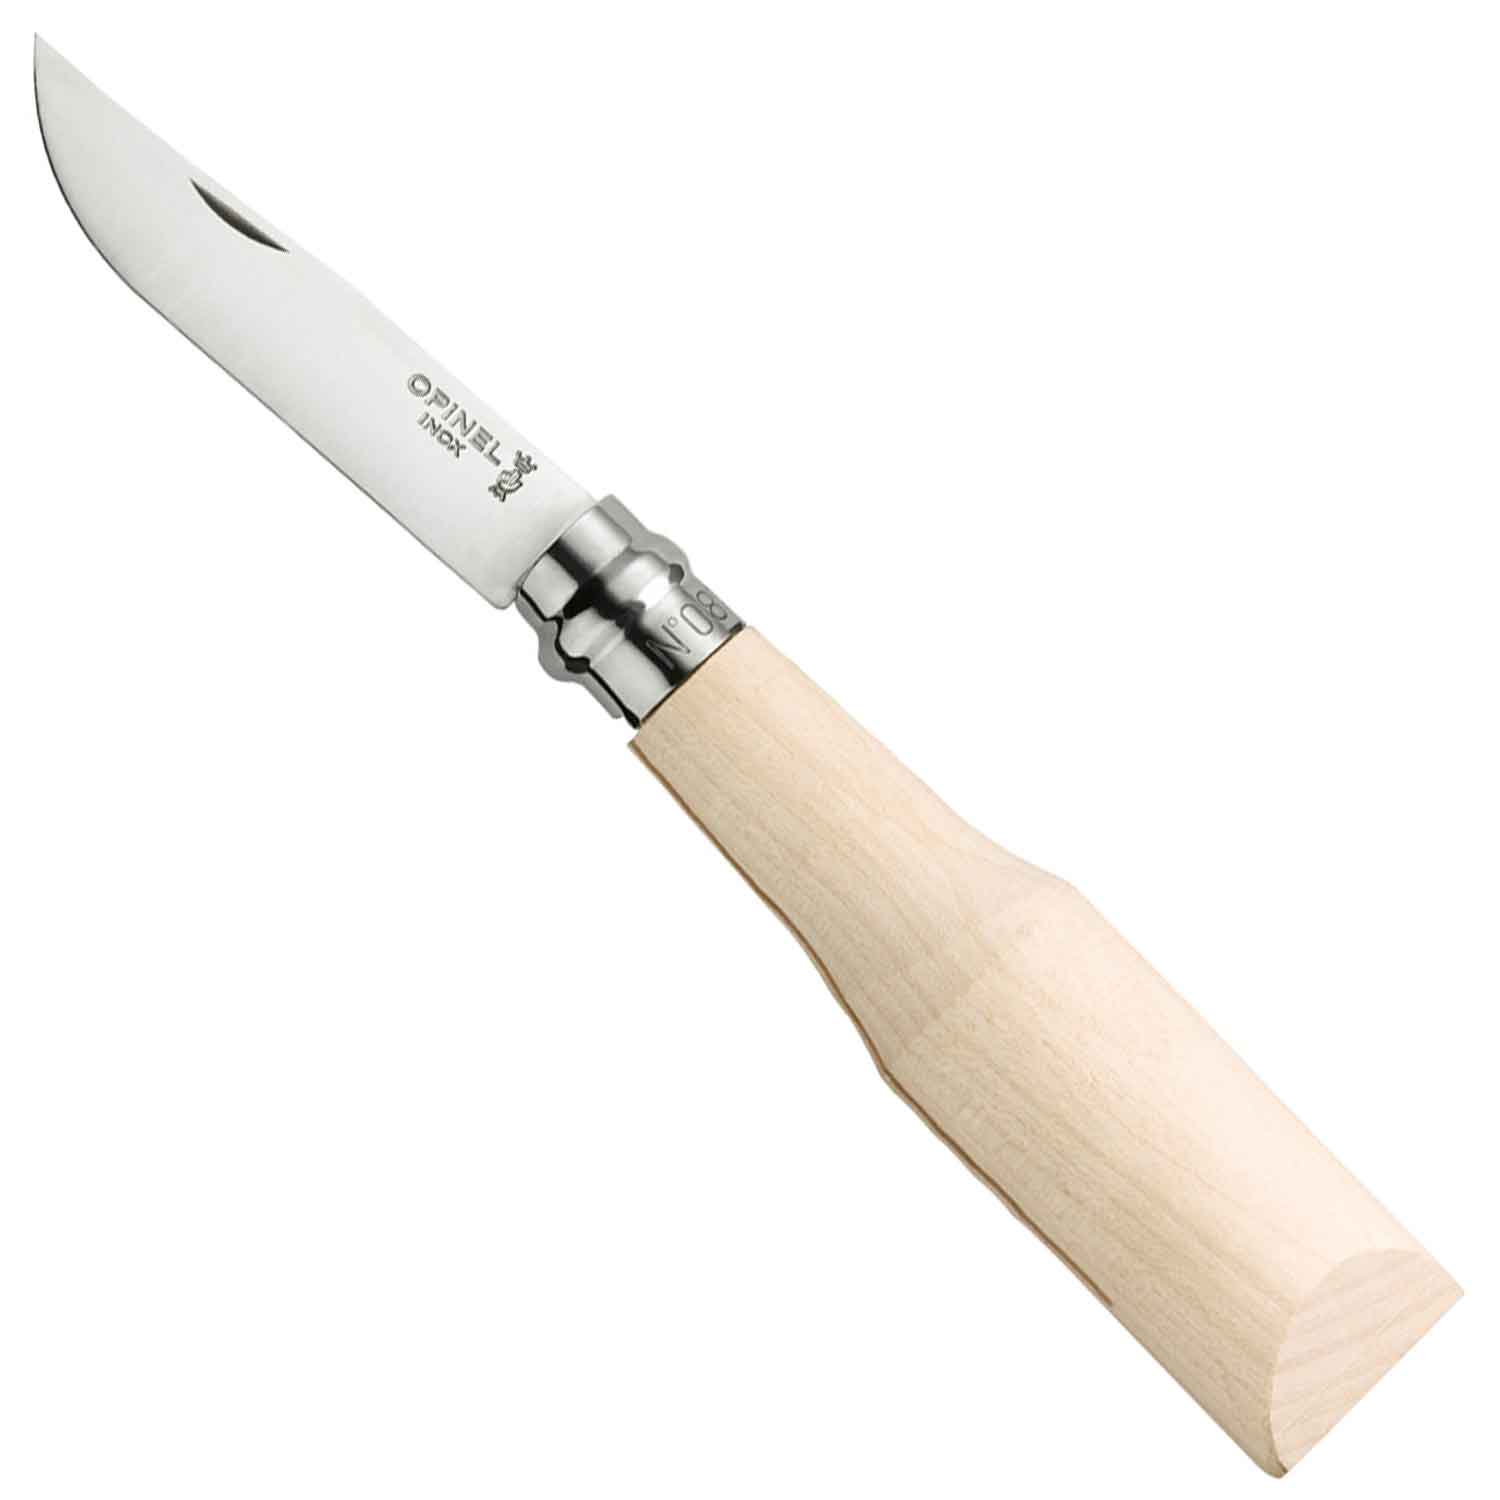 No.08 Raw / Ebauche Maple wood handle-OPINEL USA